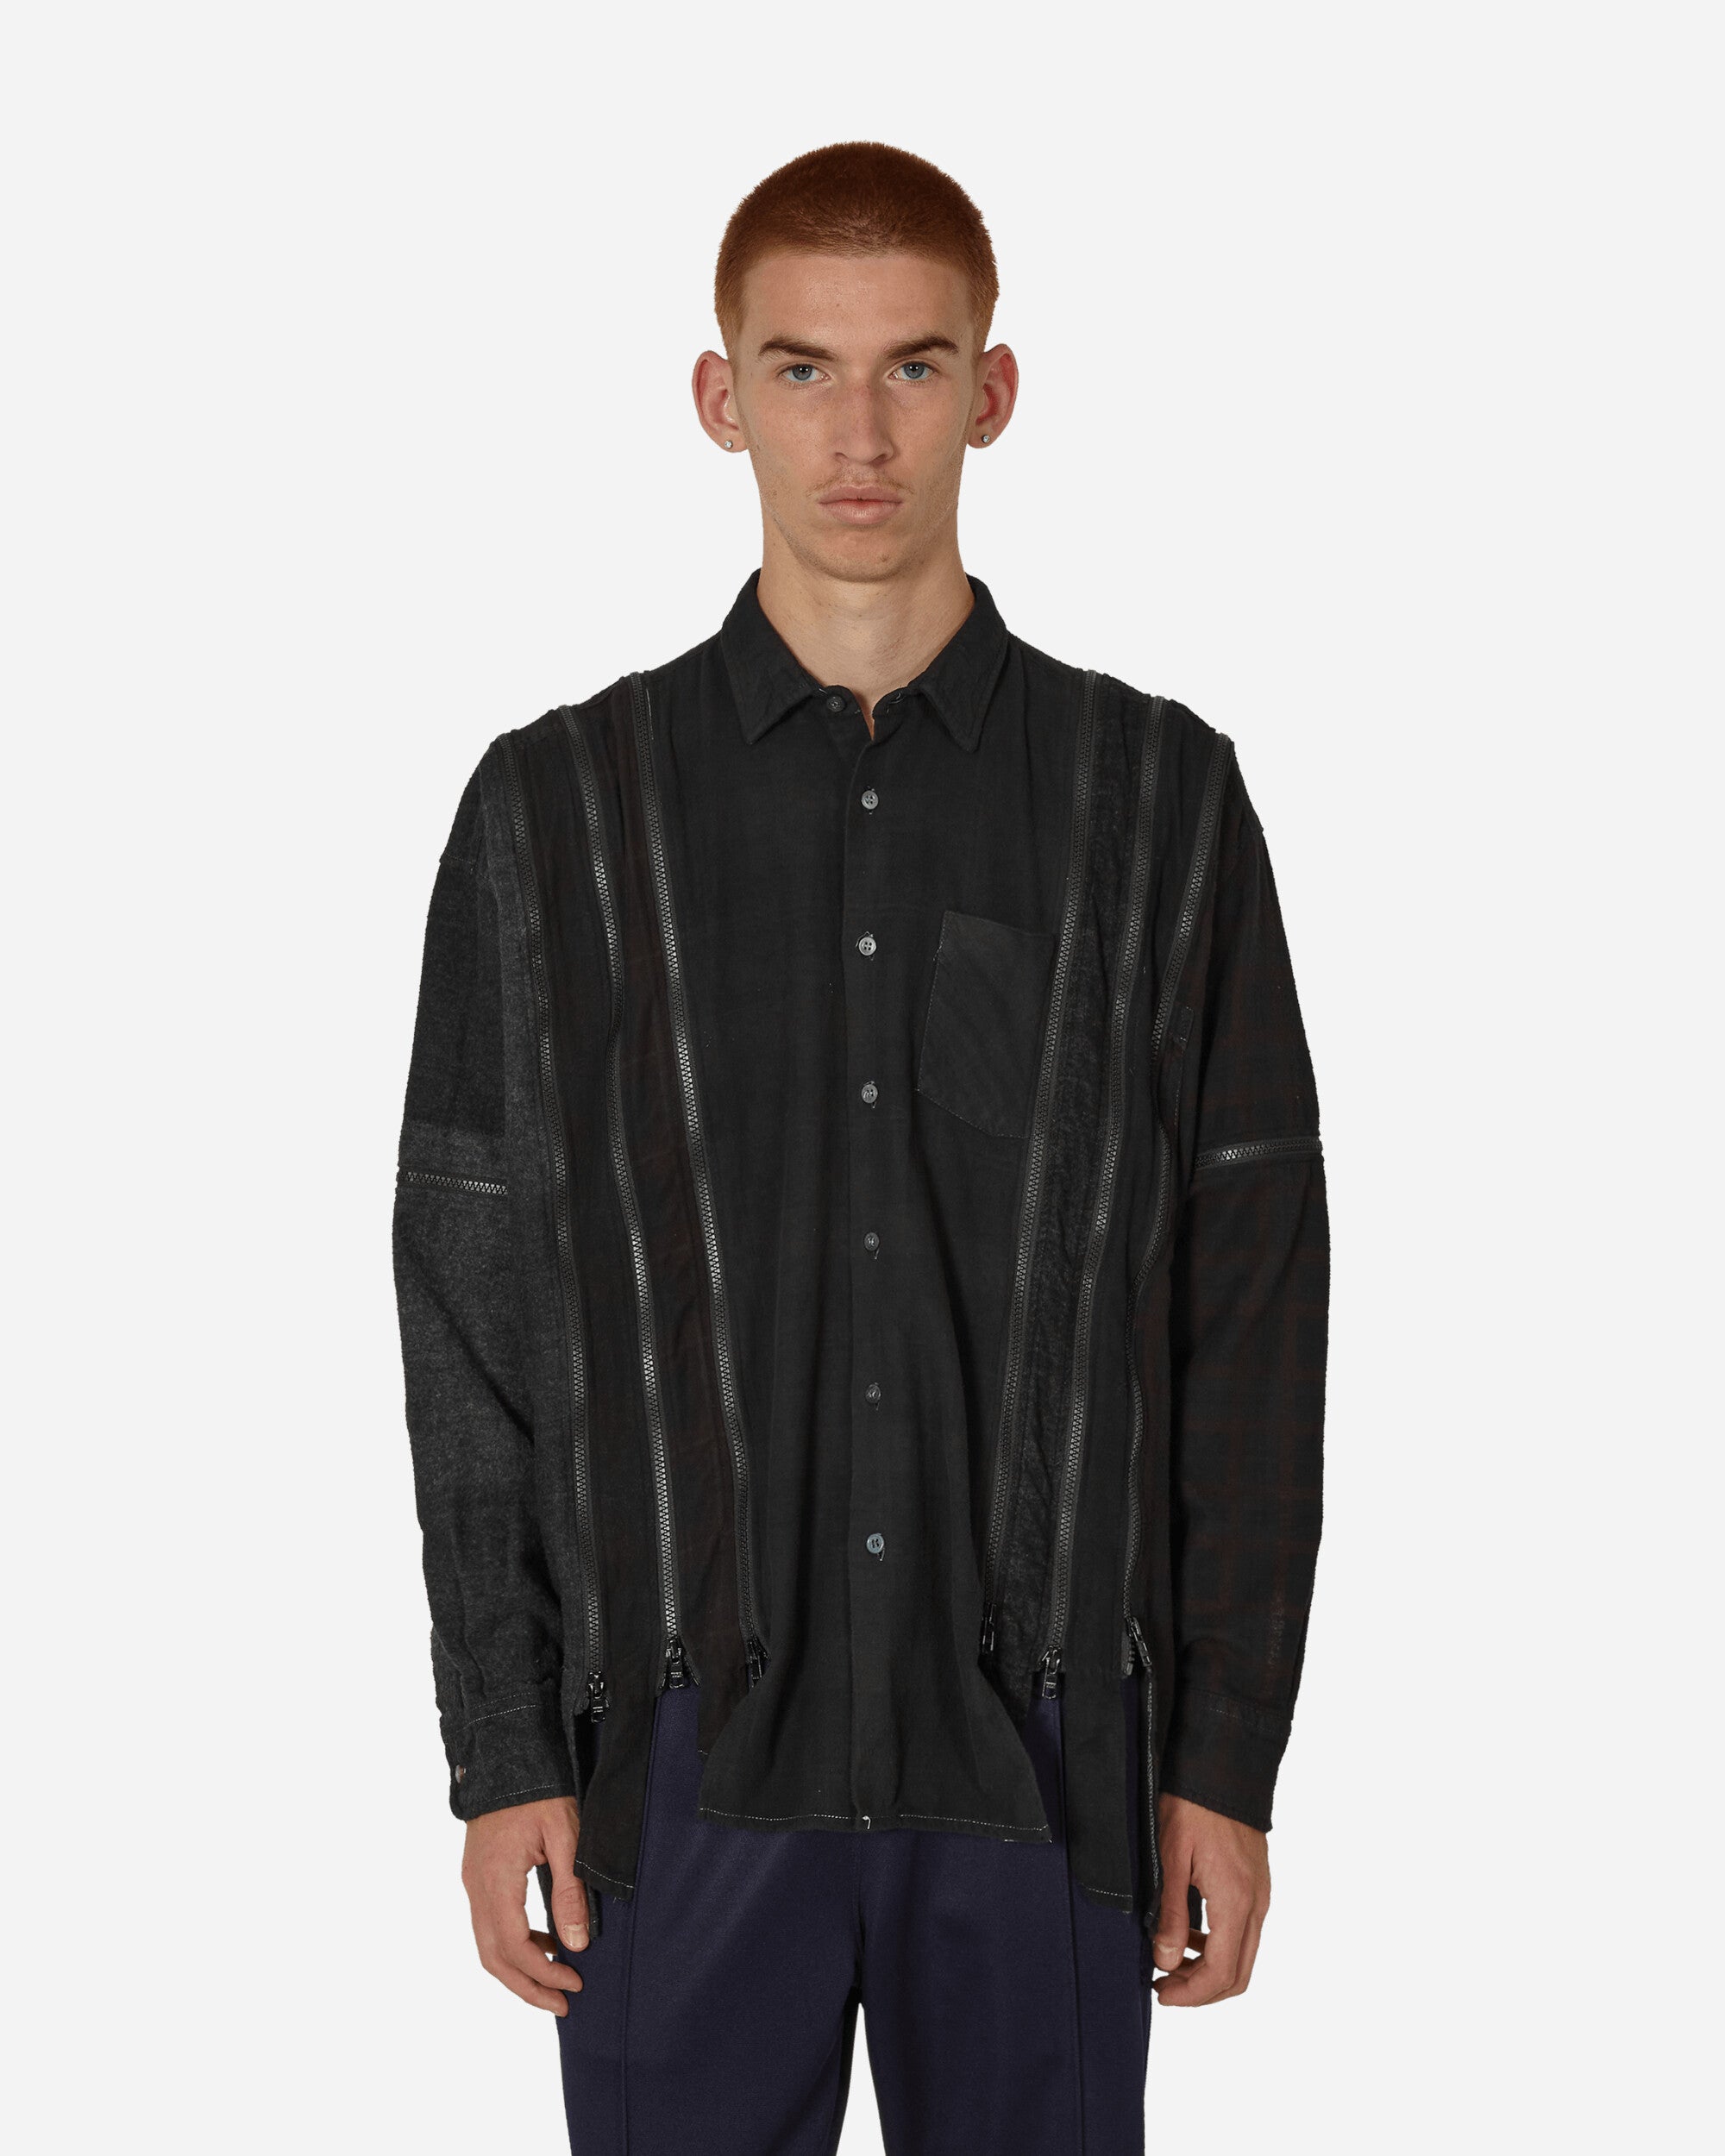 Needles Flannel Shirt -> 7 Cuts Wide Shirt / Over Dye Black Shirts Longsleeve Shirt NS301 E010